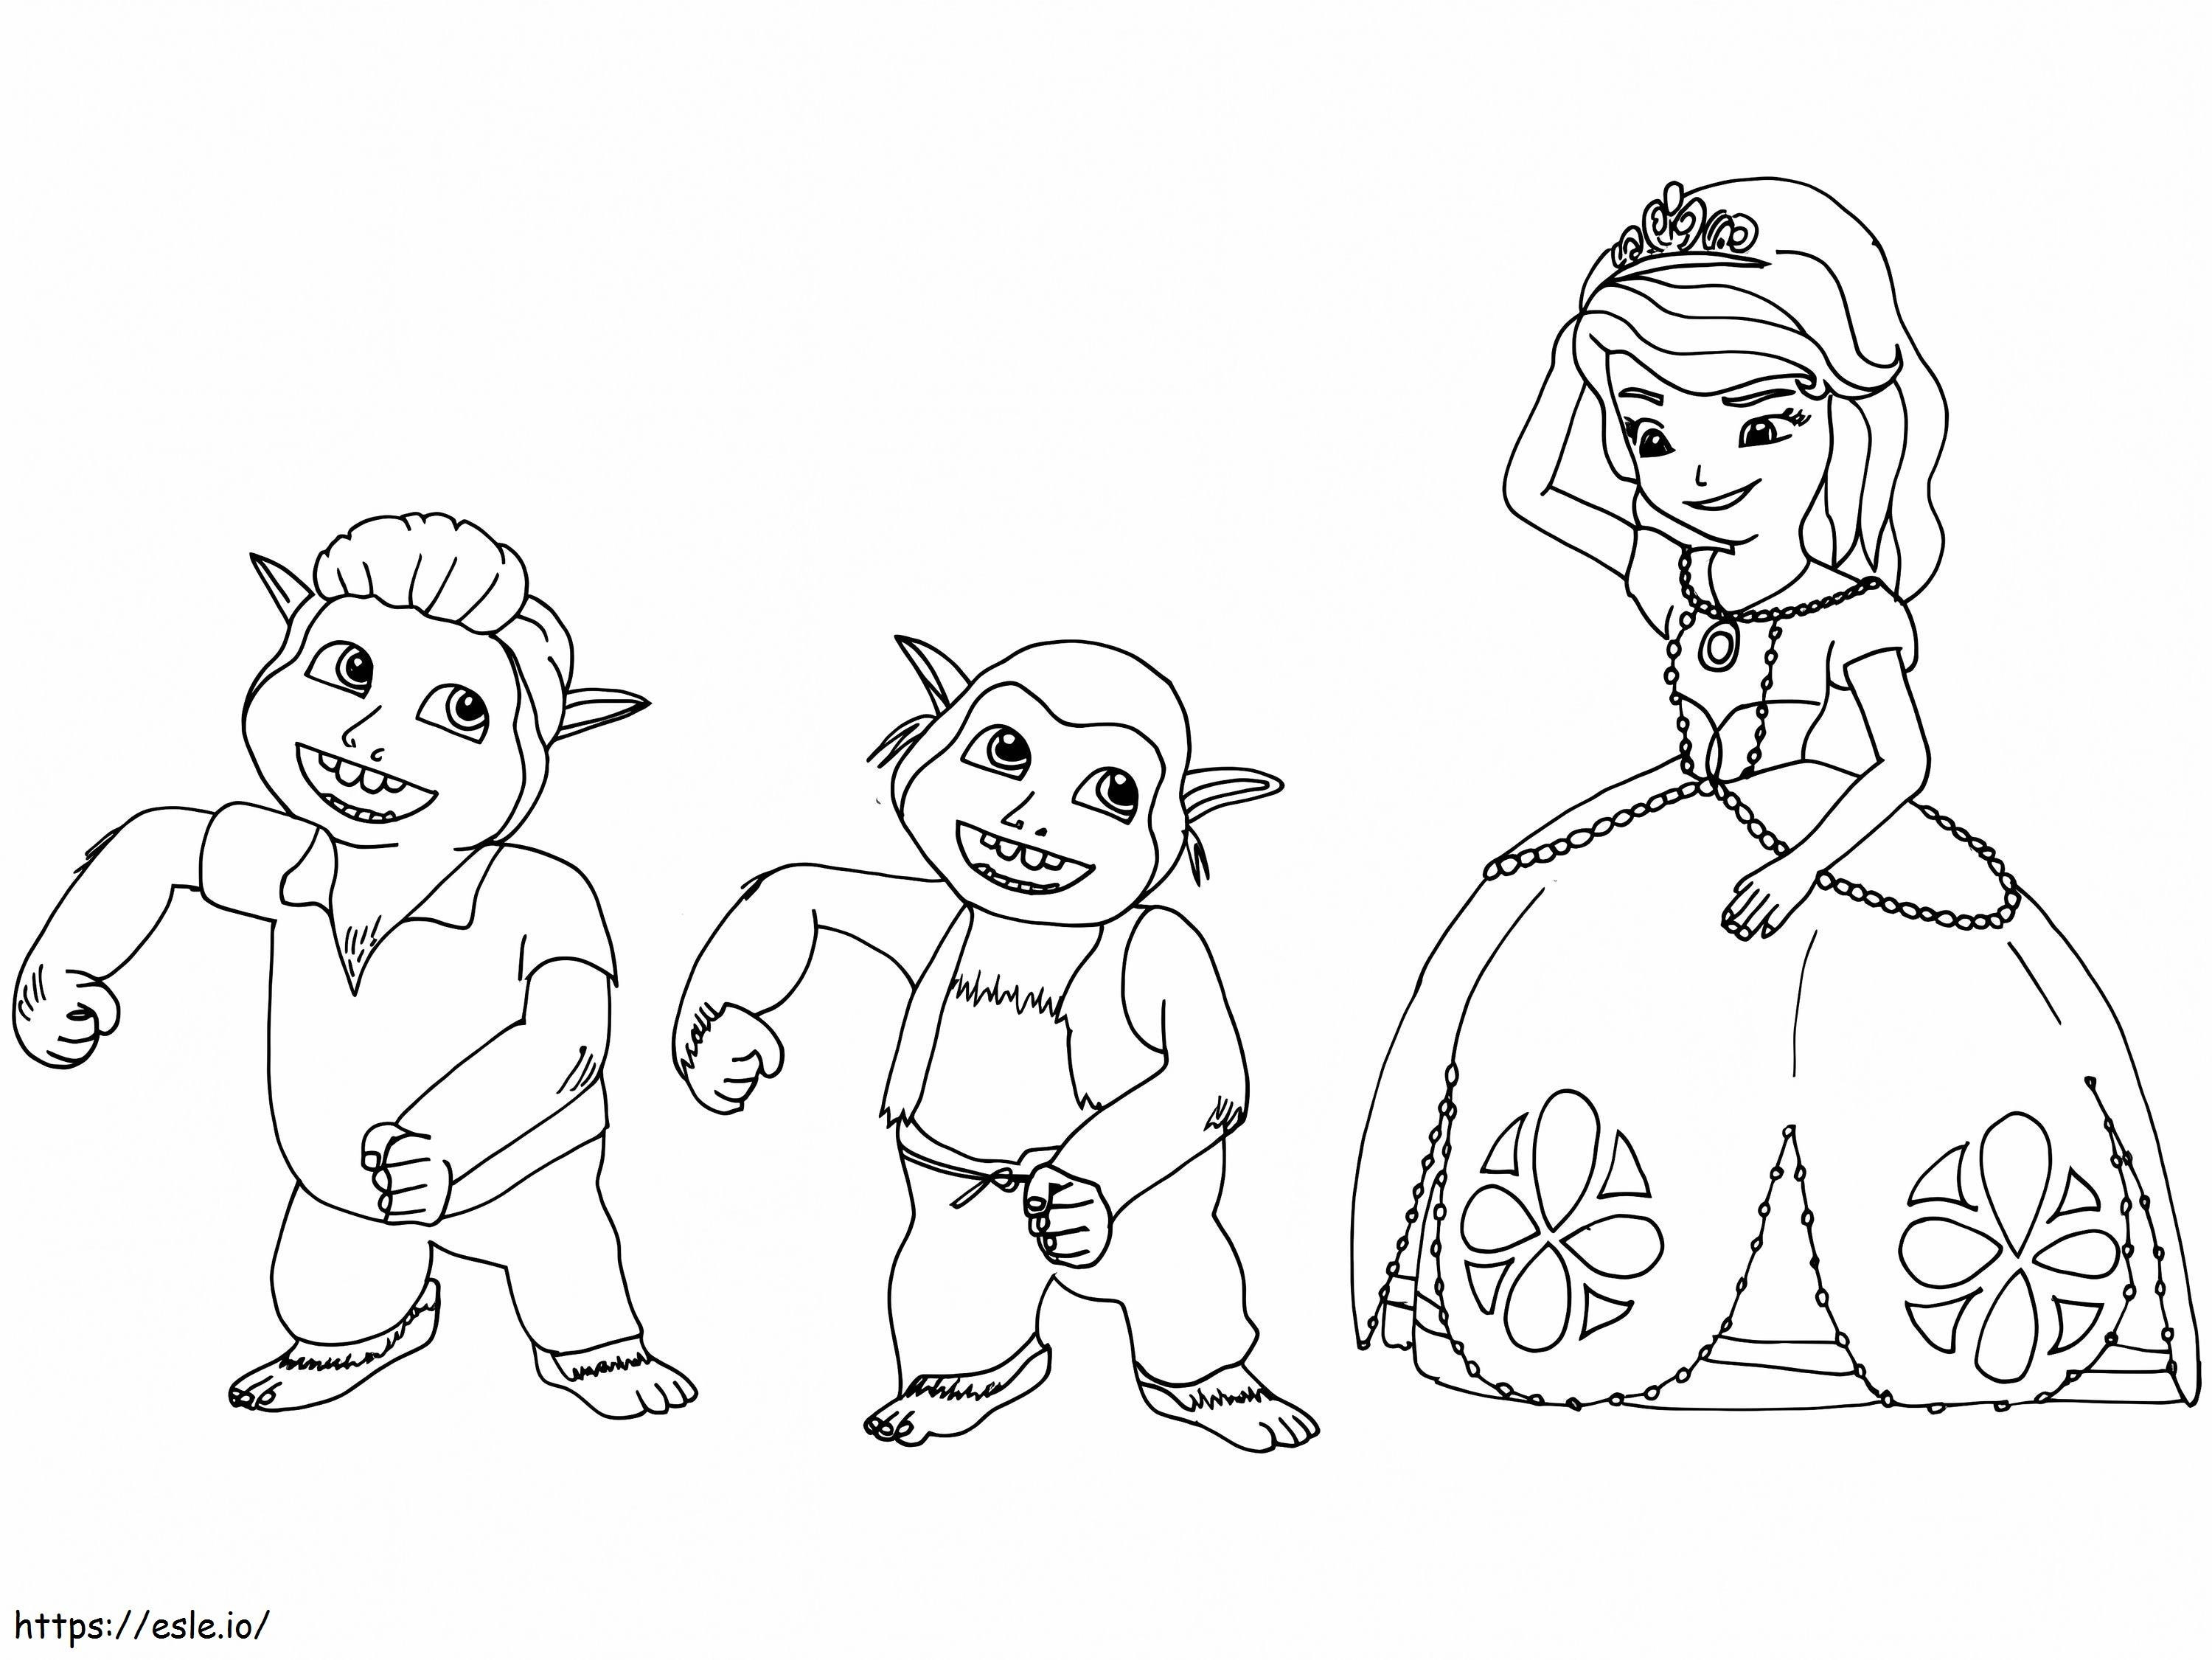 Happy Princess Sofia coloring page